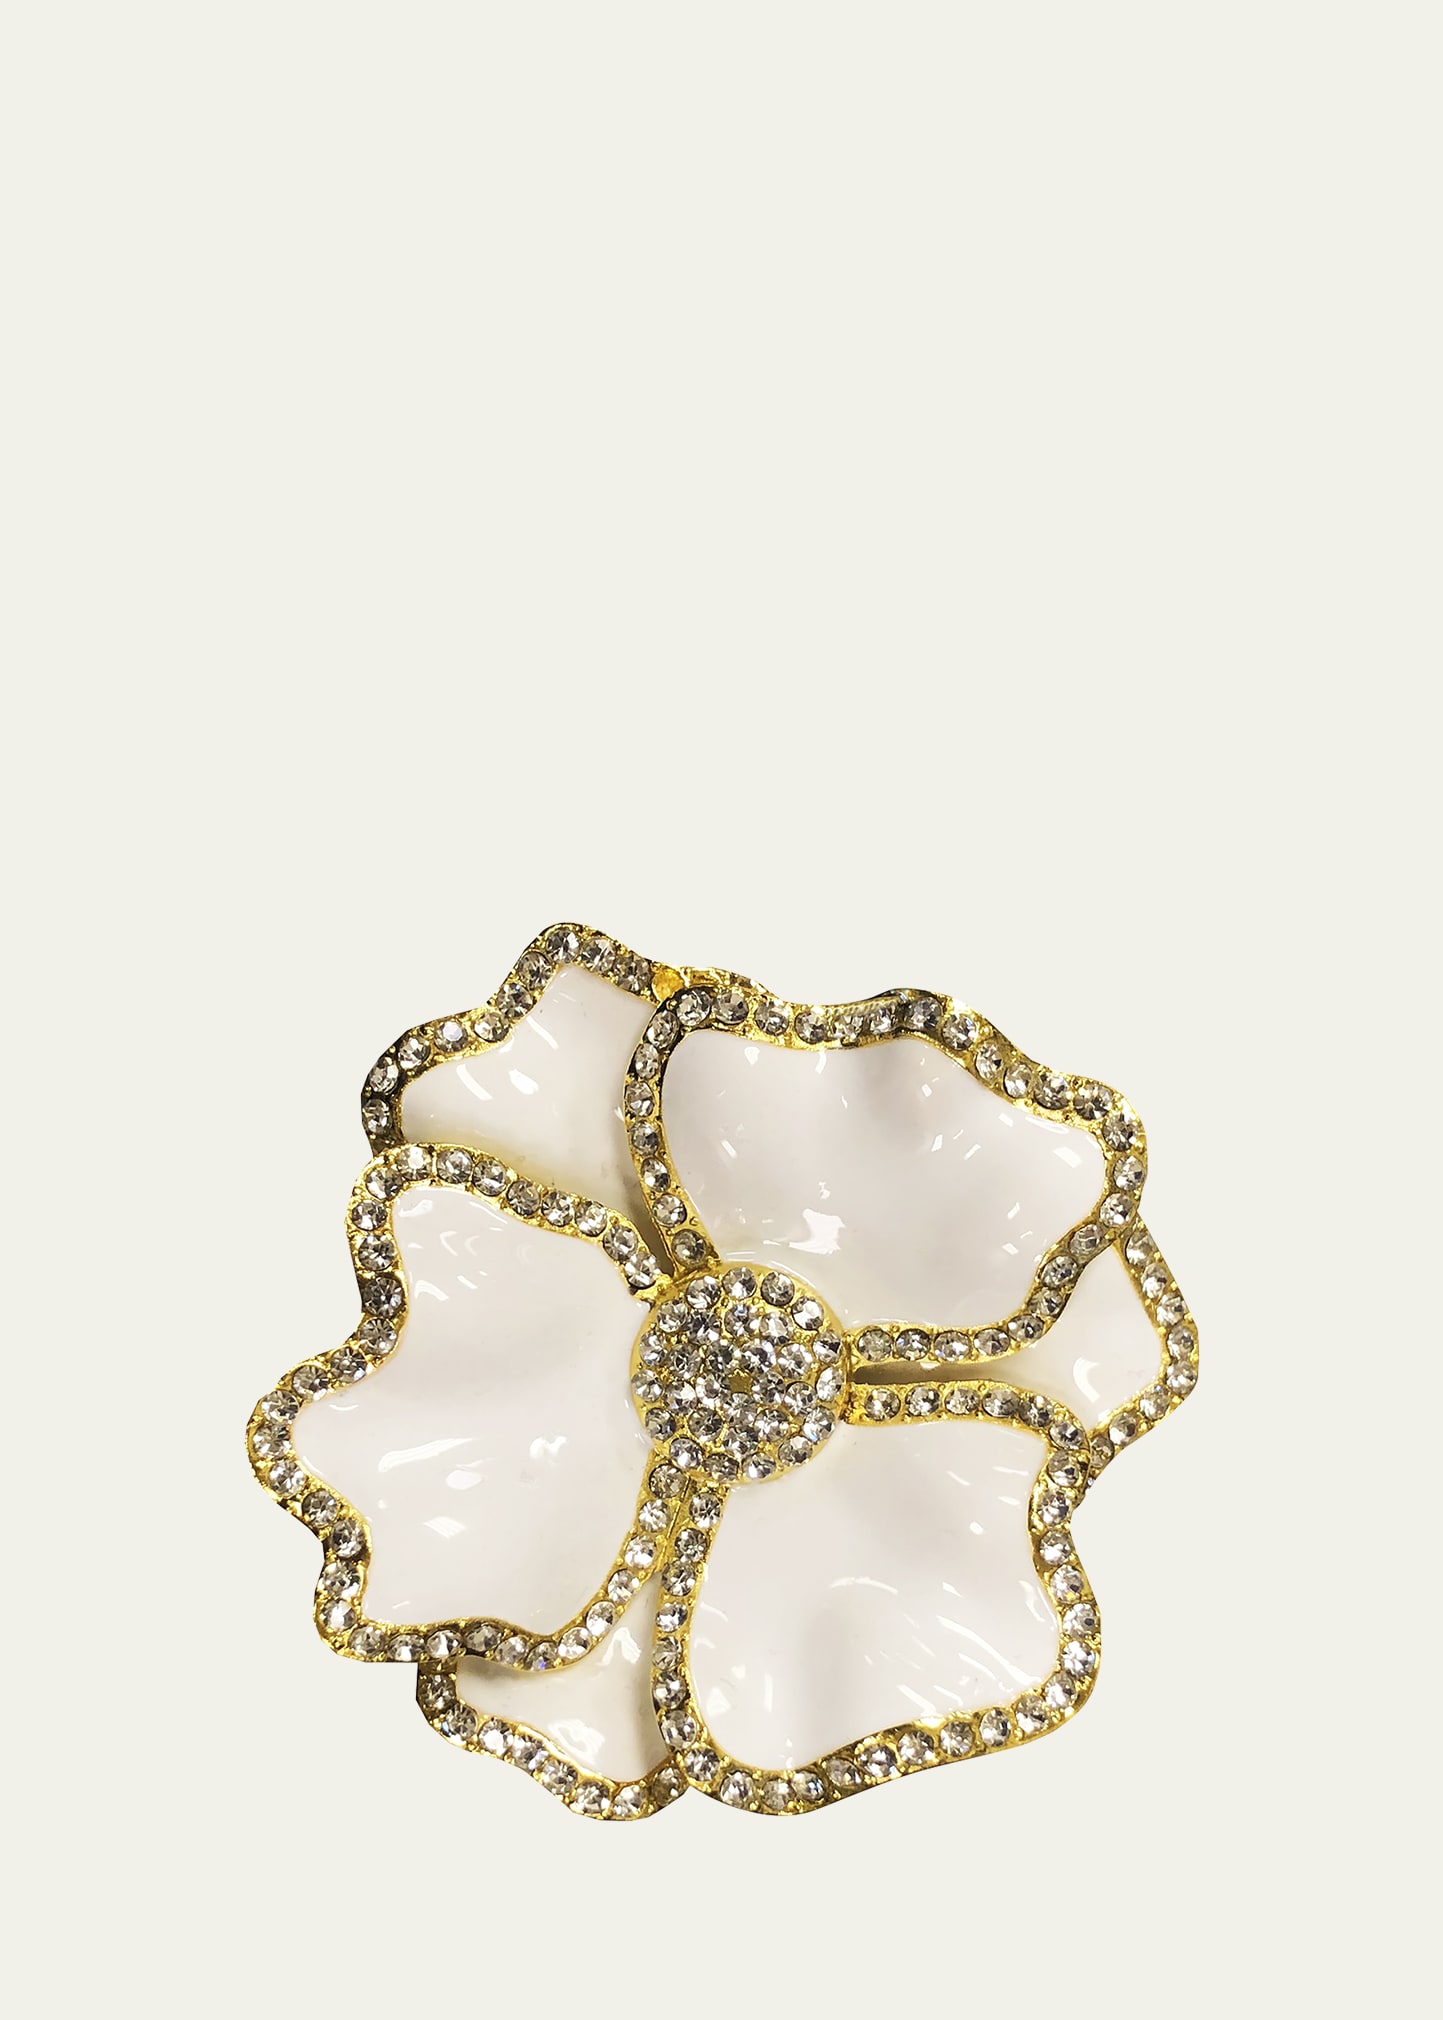 White Flower Napkin Rings With Crystal Border, Set Of 4